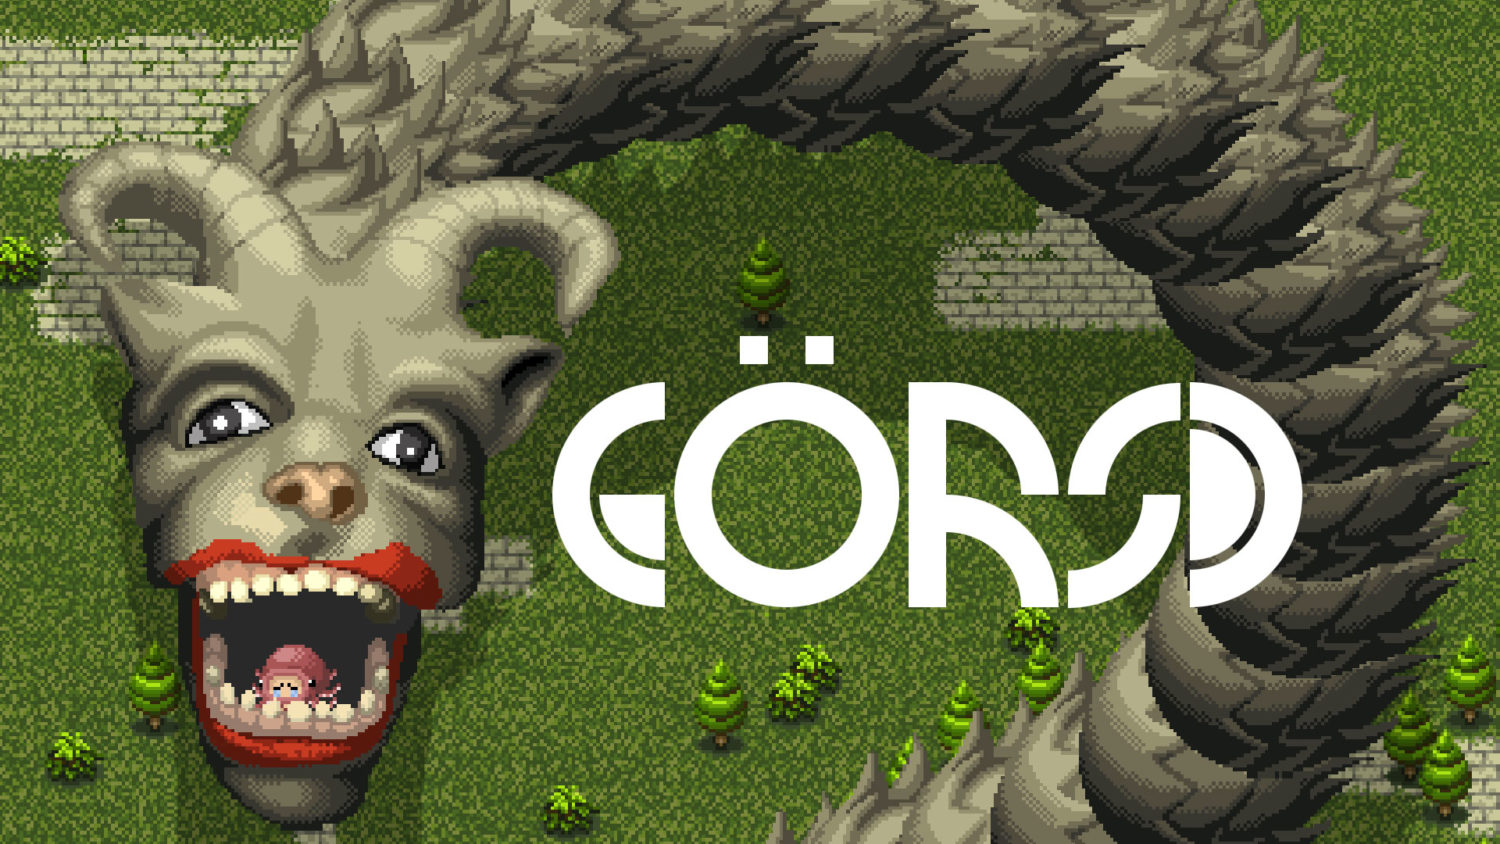 GORSD - Nintendo Switch - title screen